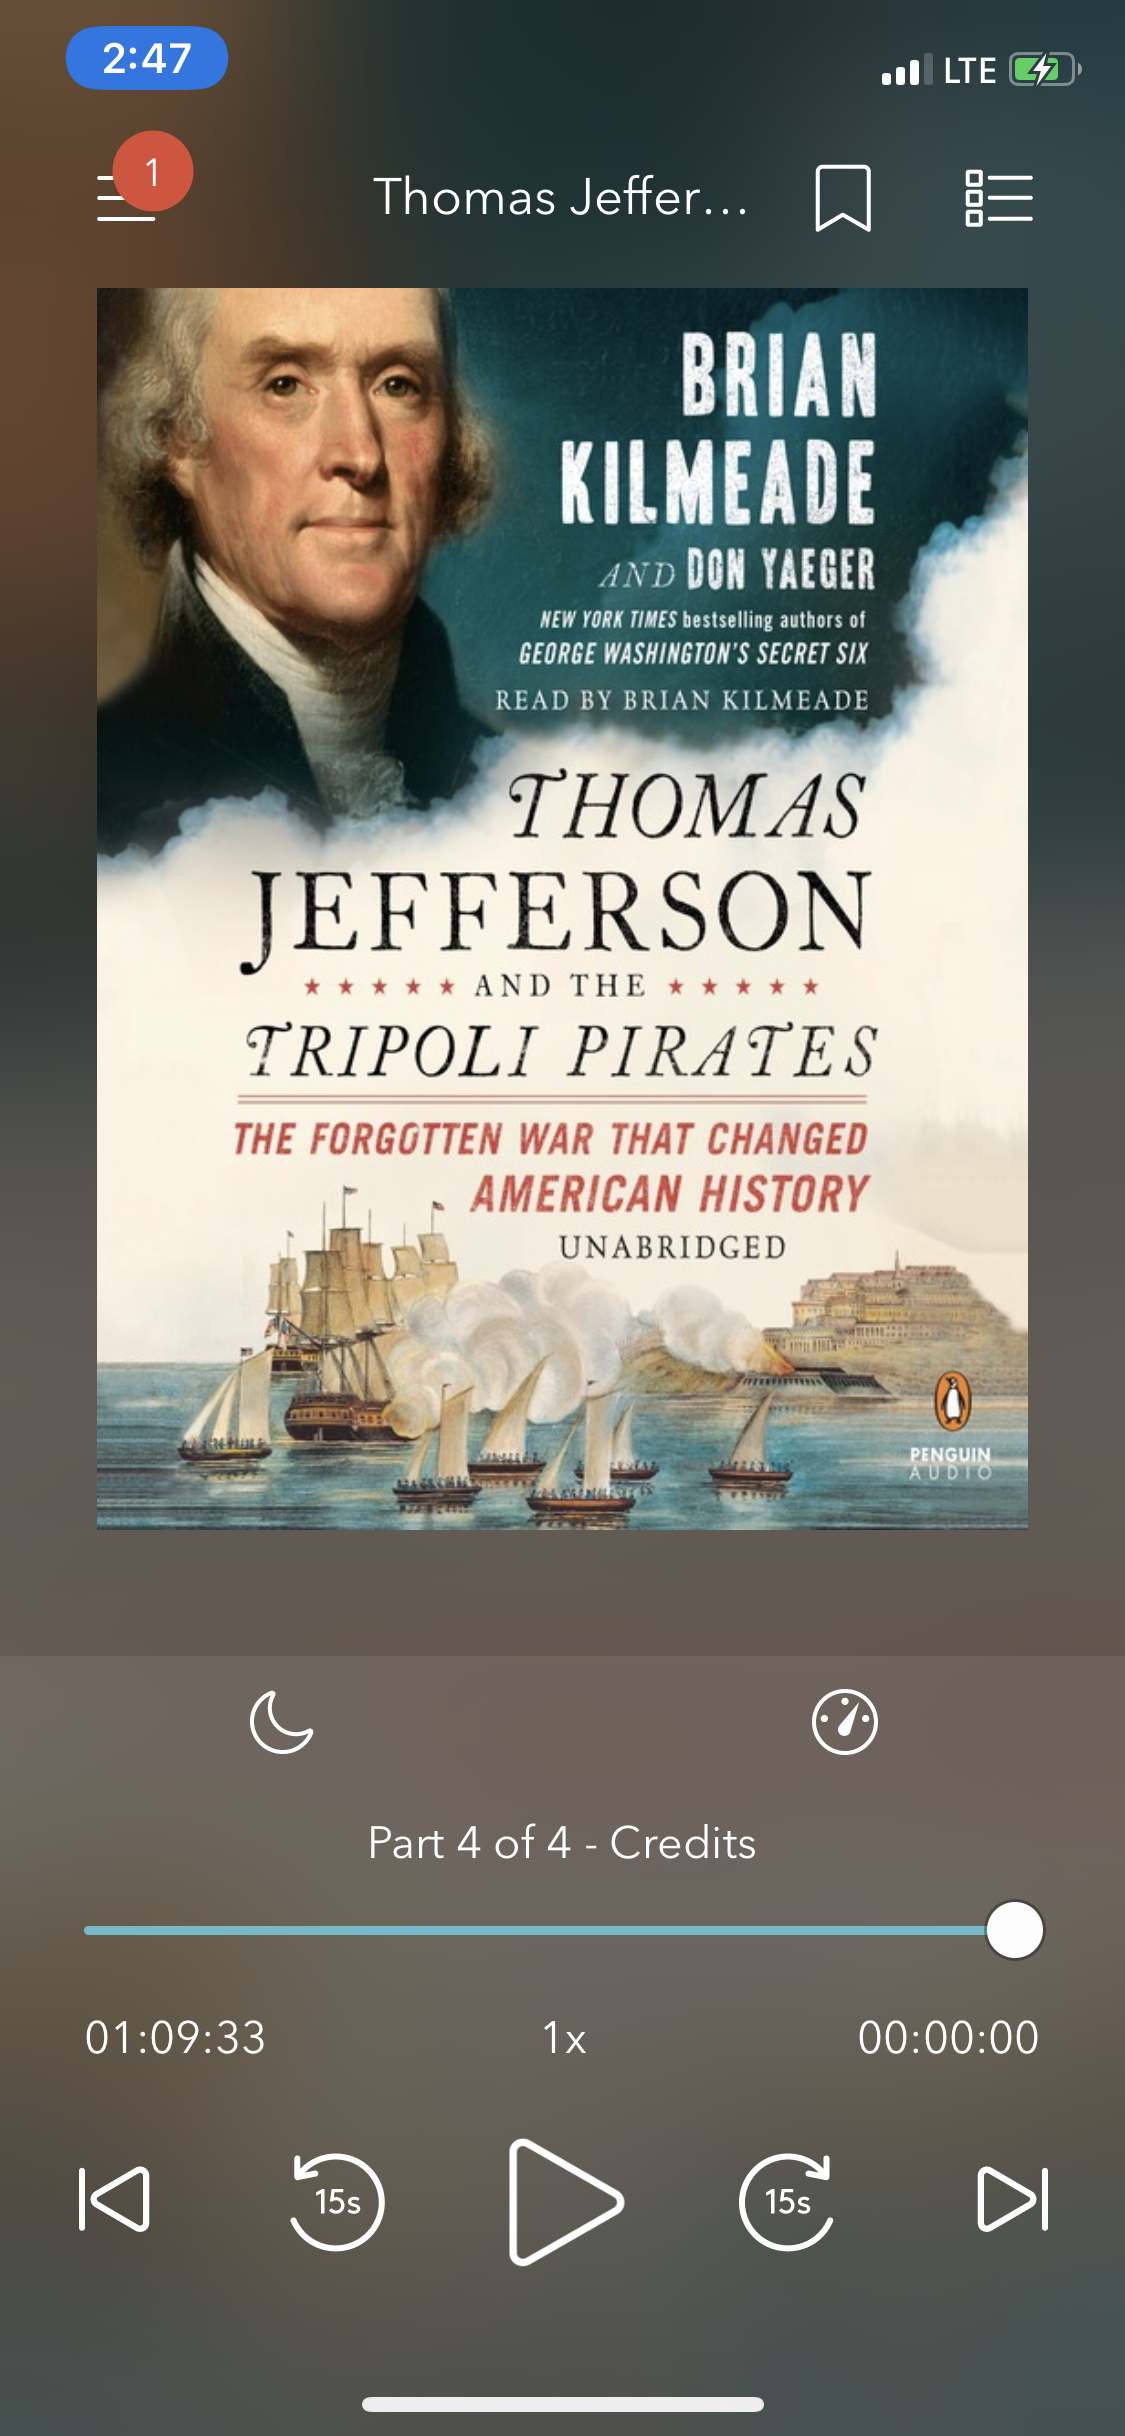 Thomas Jefferson and the Tripoli Pirates by Brian Kilmeade